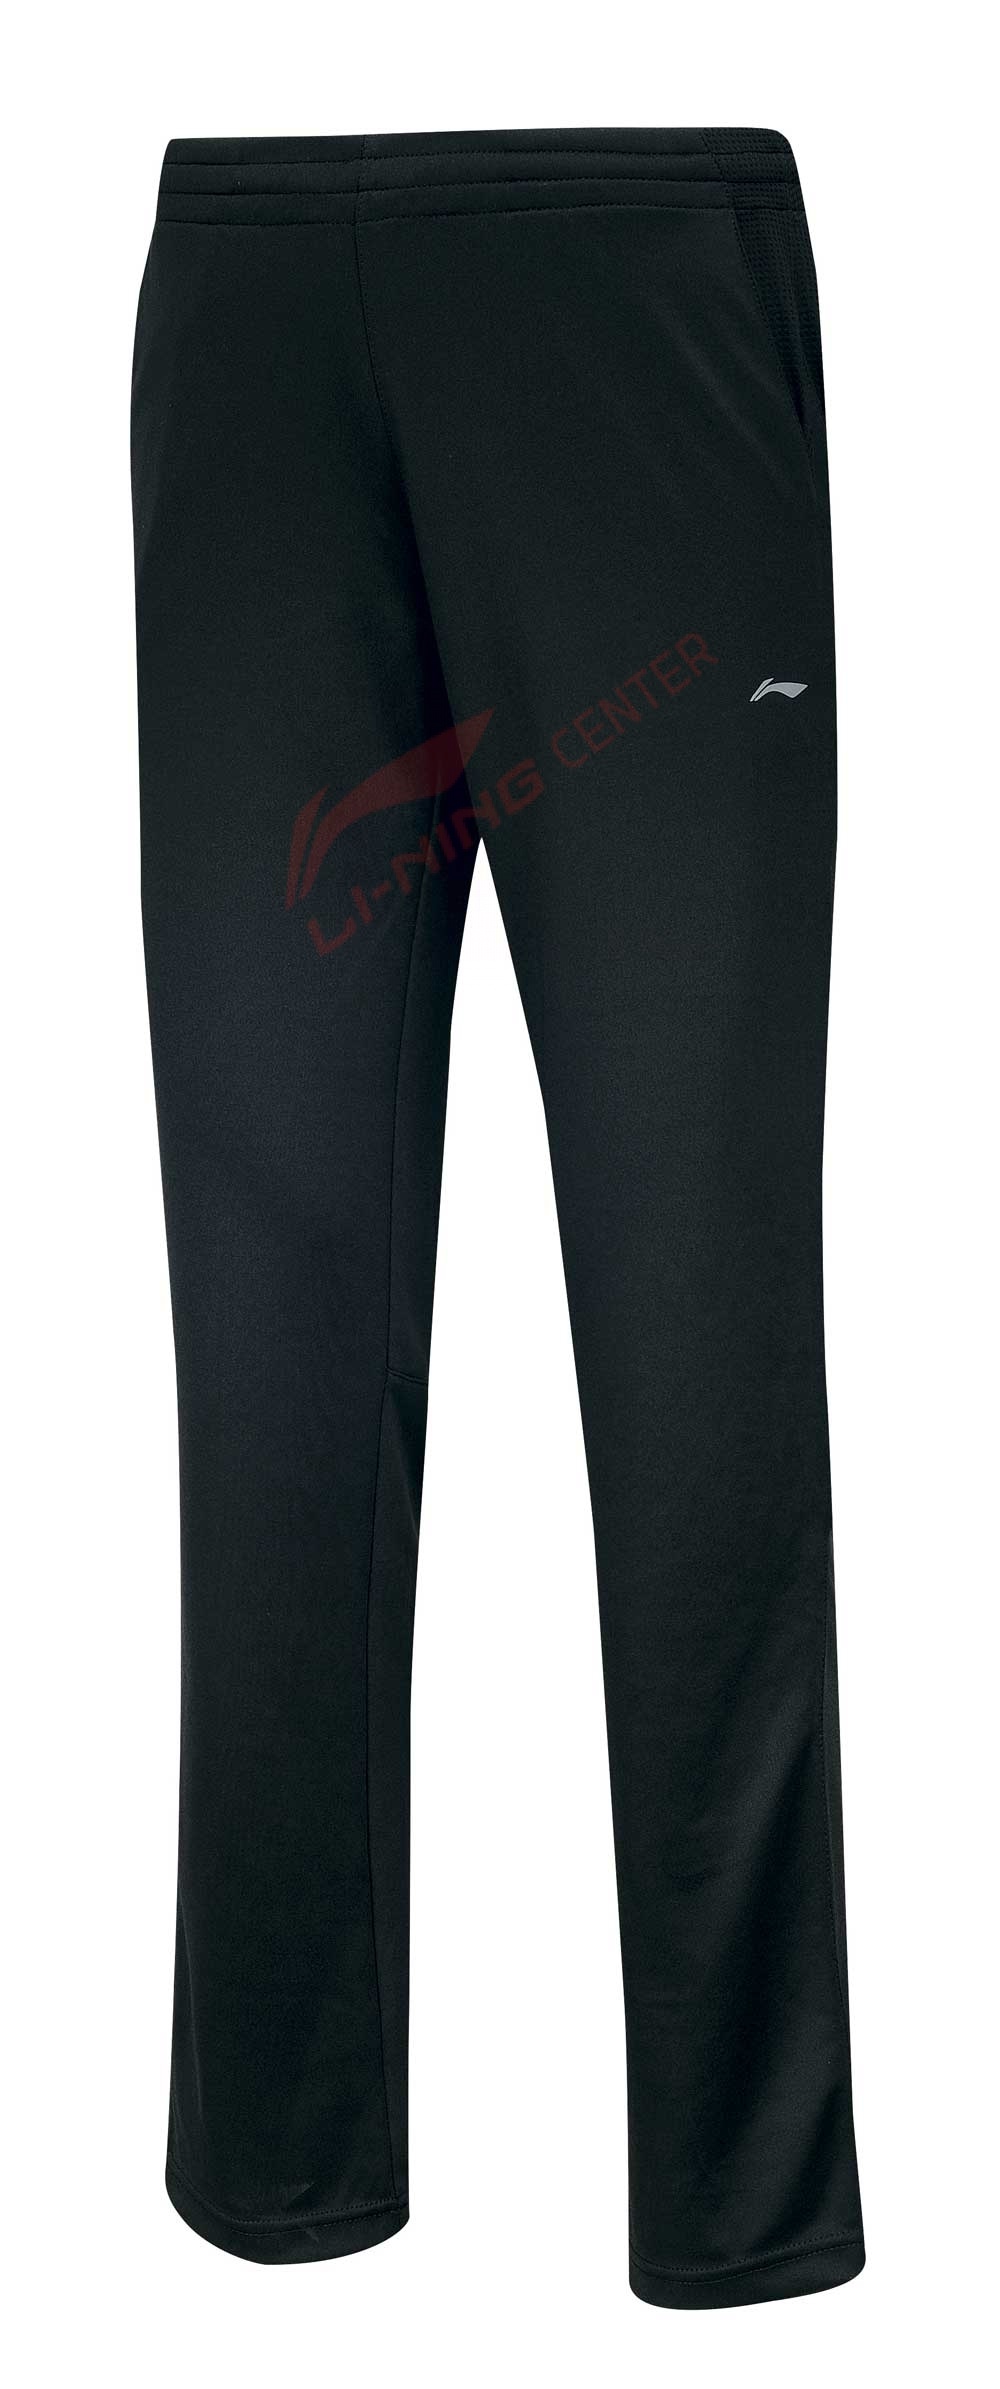 Спортивные штаны LI-NING AKLK172-2 (размер: S, M)